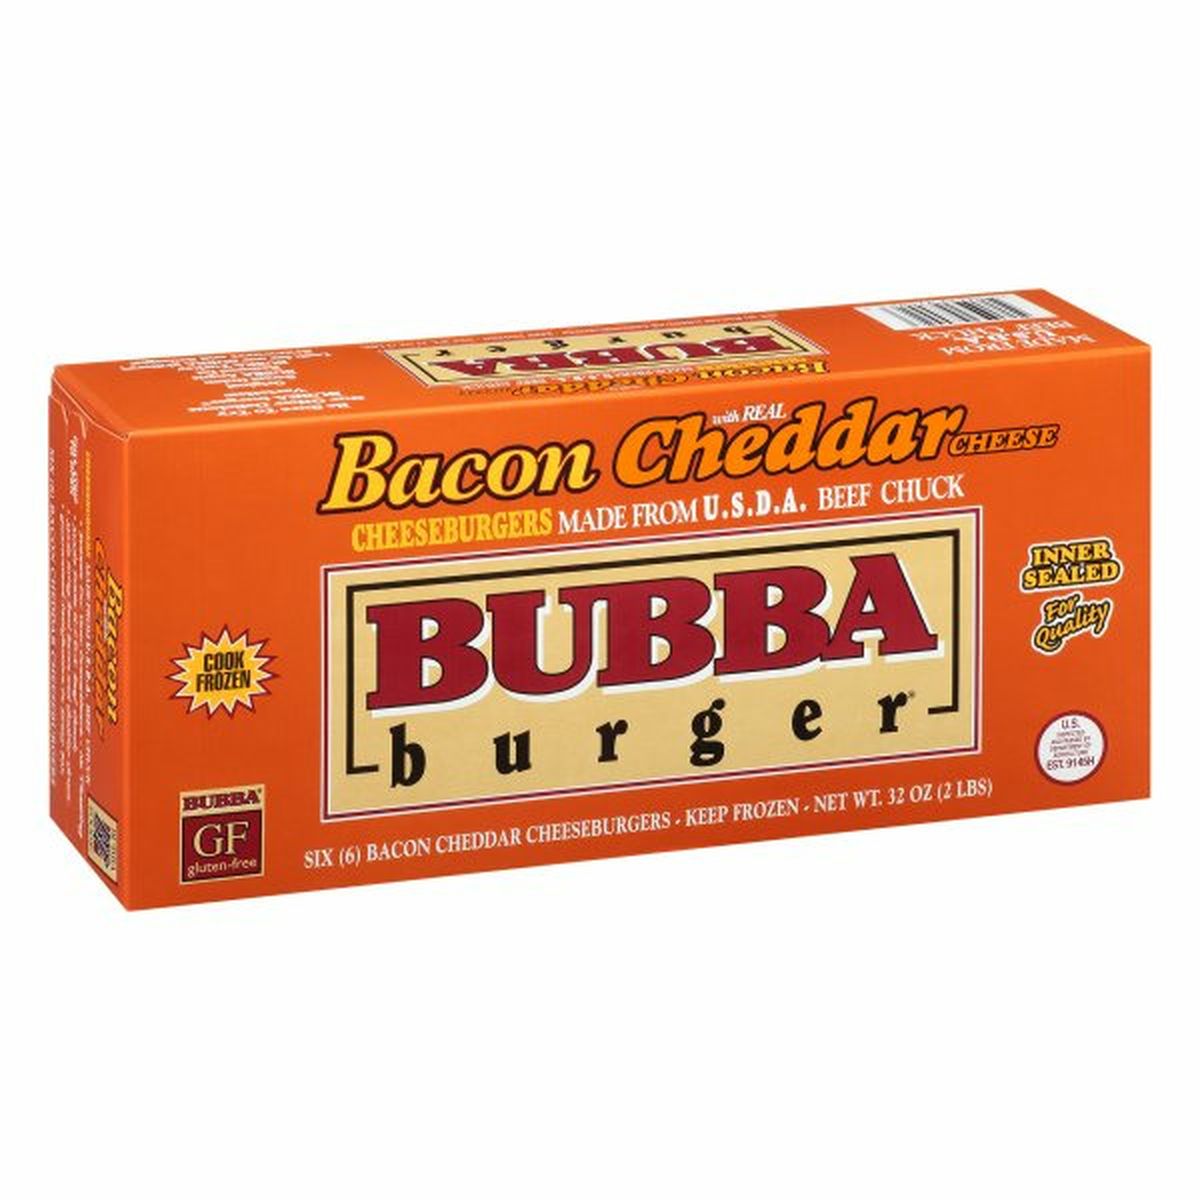 Calories in Bubba Burger Cheeseburgers, Bacon Cheddar Cheese